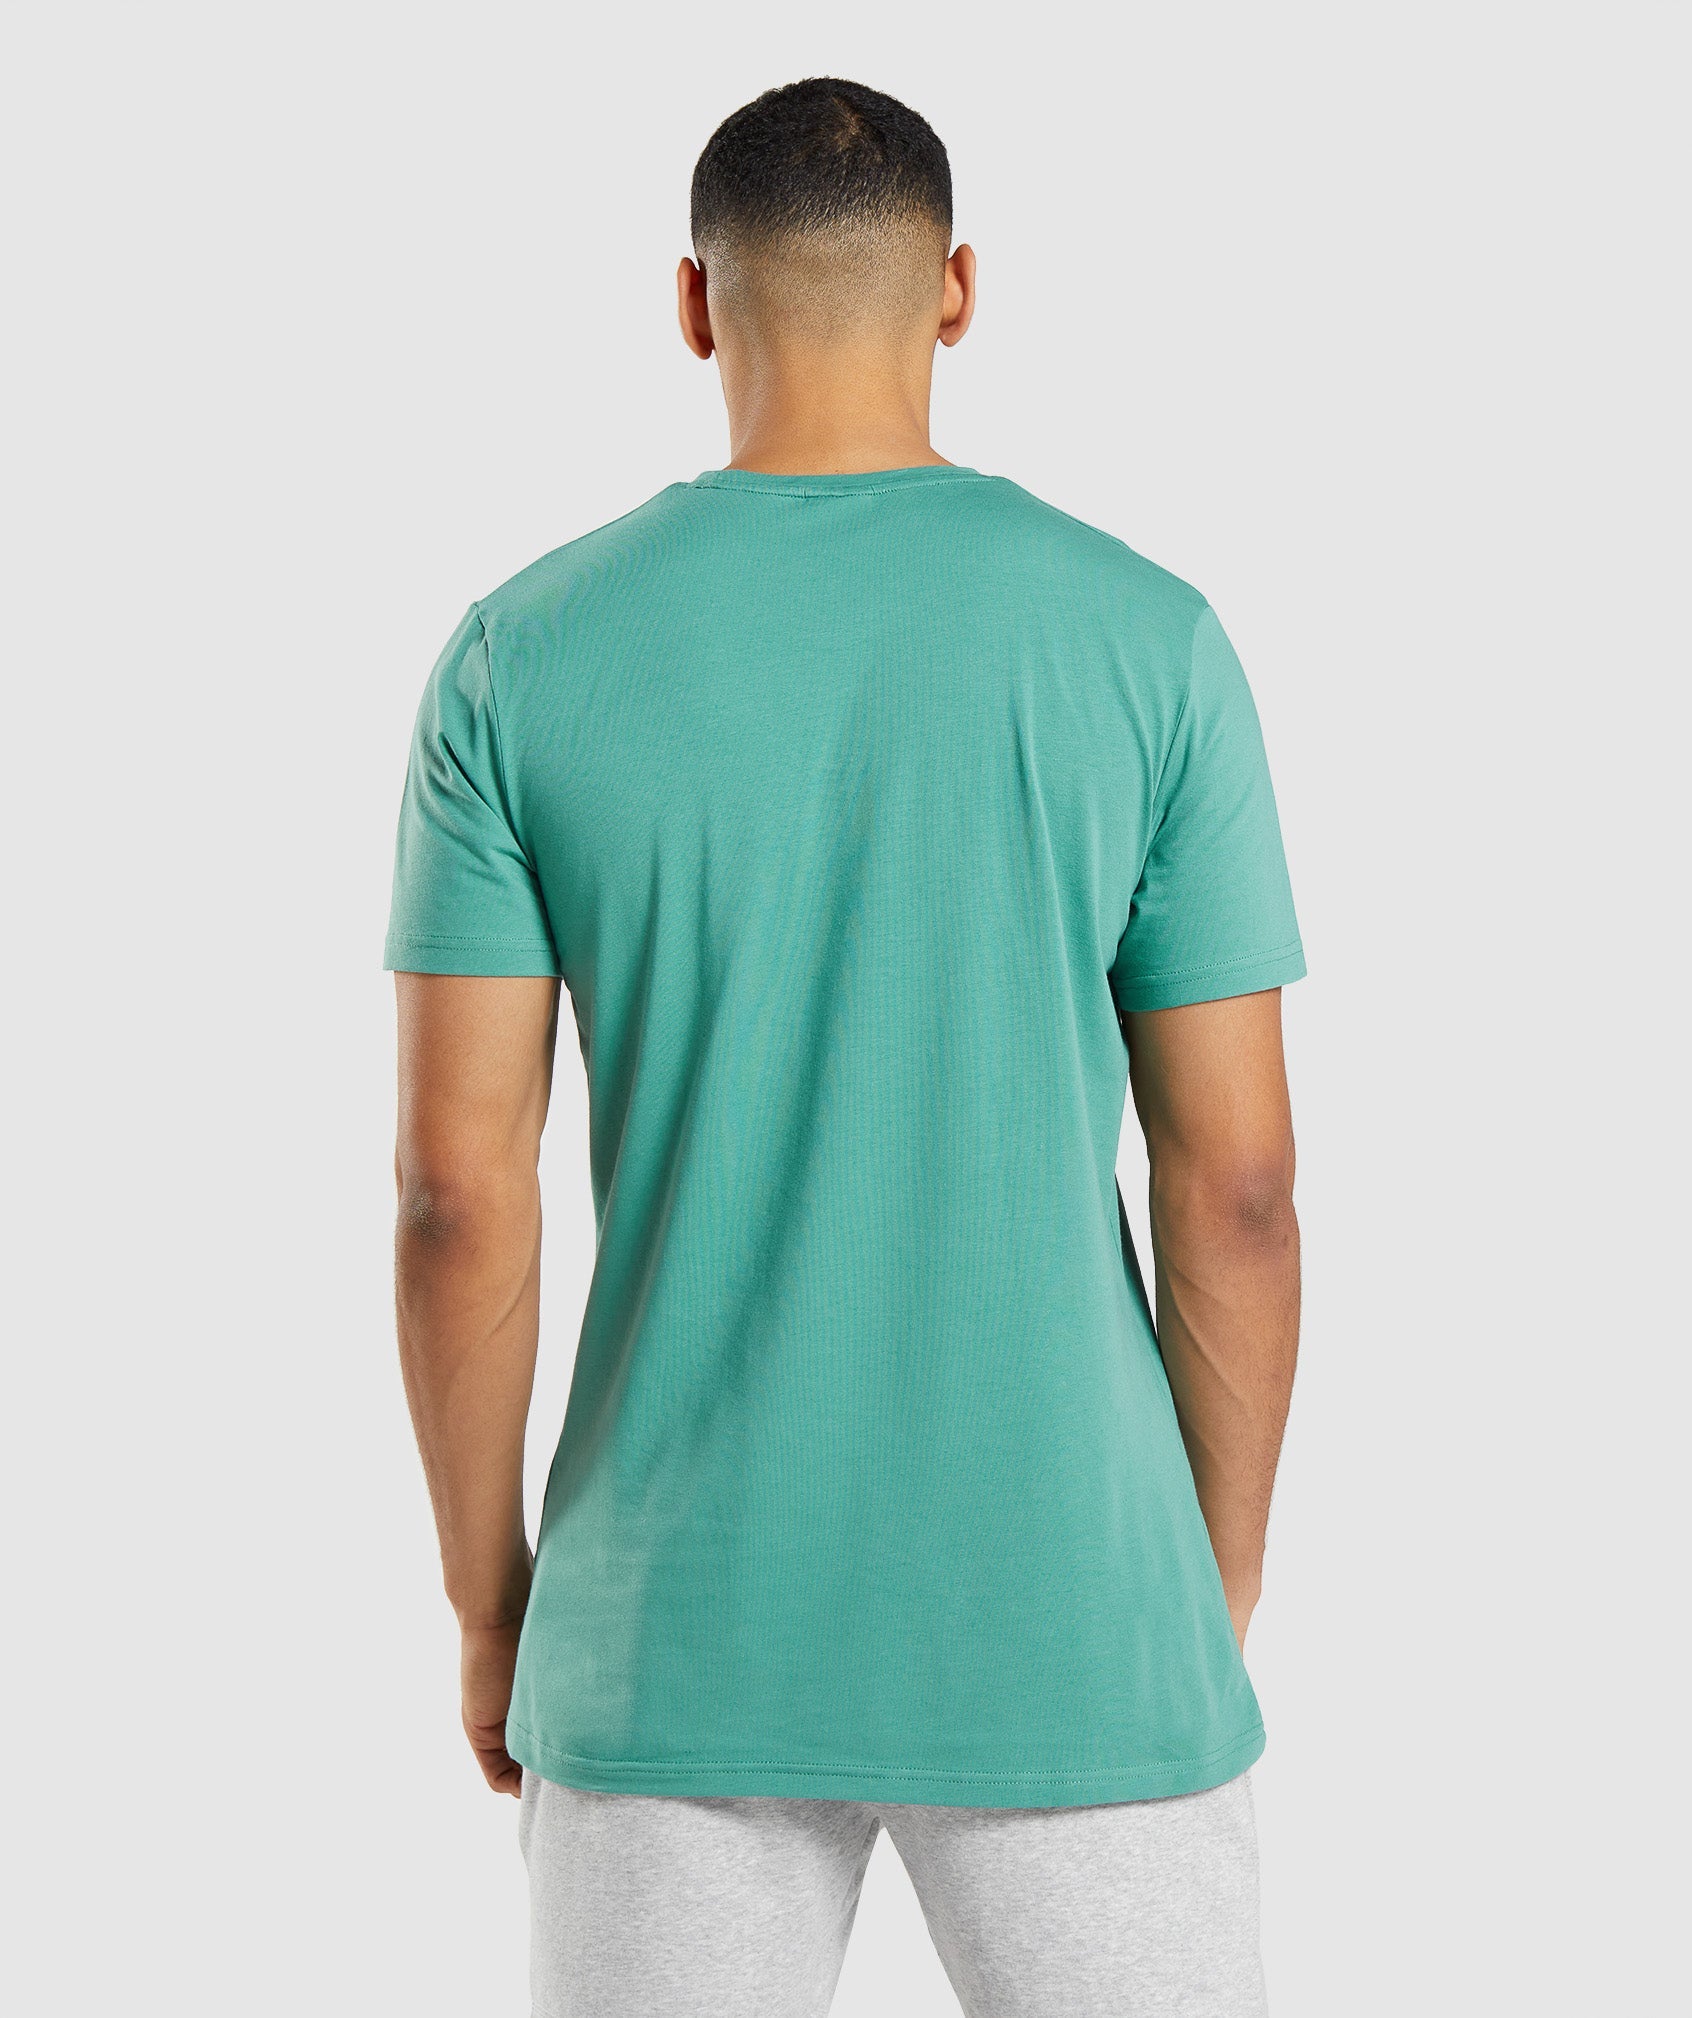 Essential T-Shirt in Alpine Green - view 2